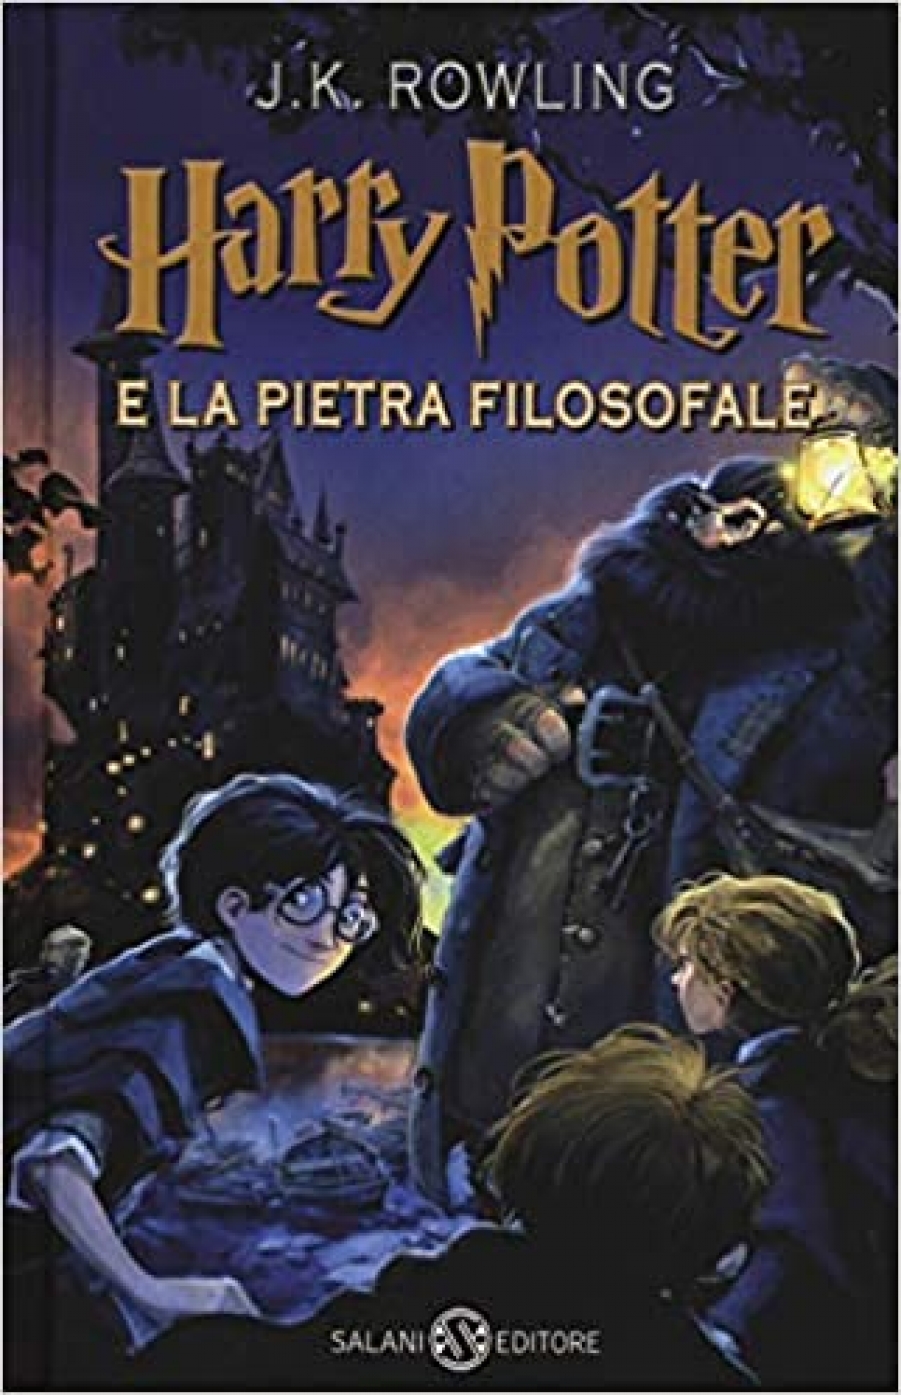    Harry Potter e la pietra filosofale 1 